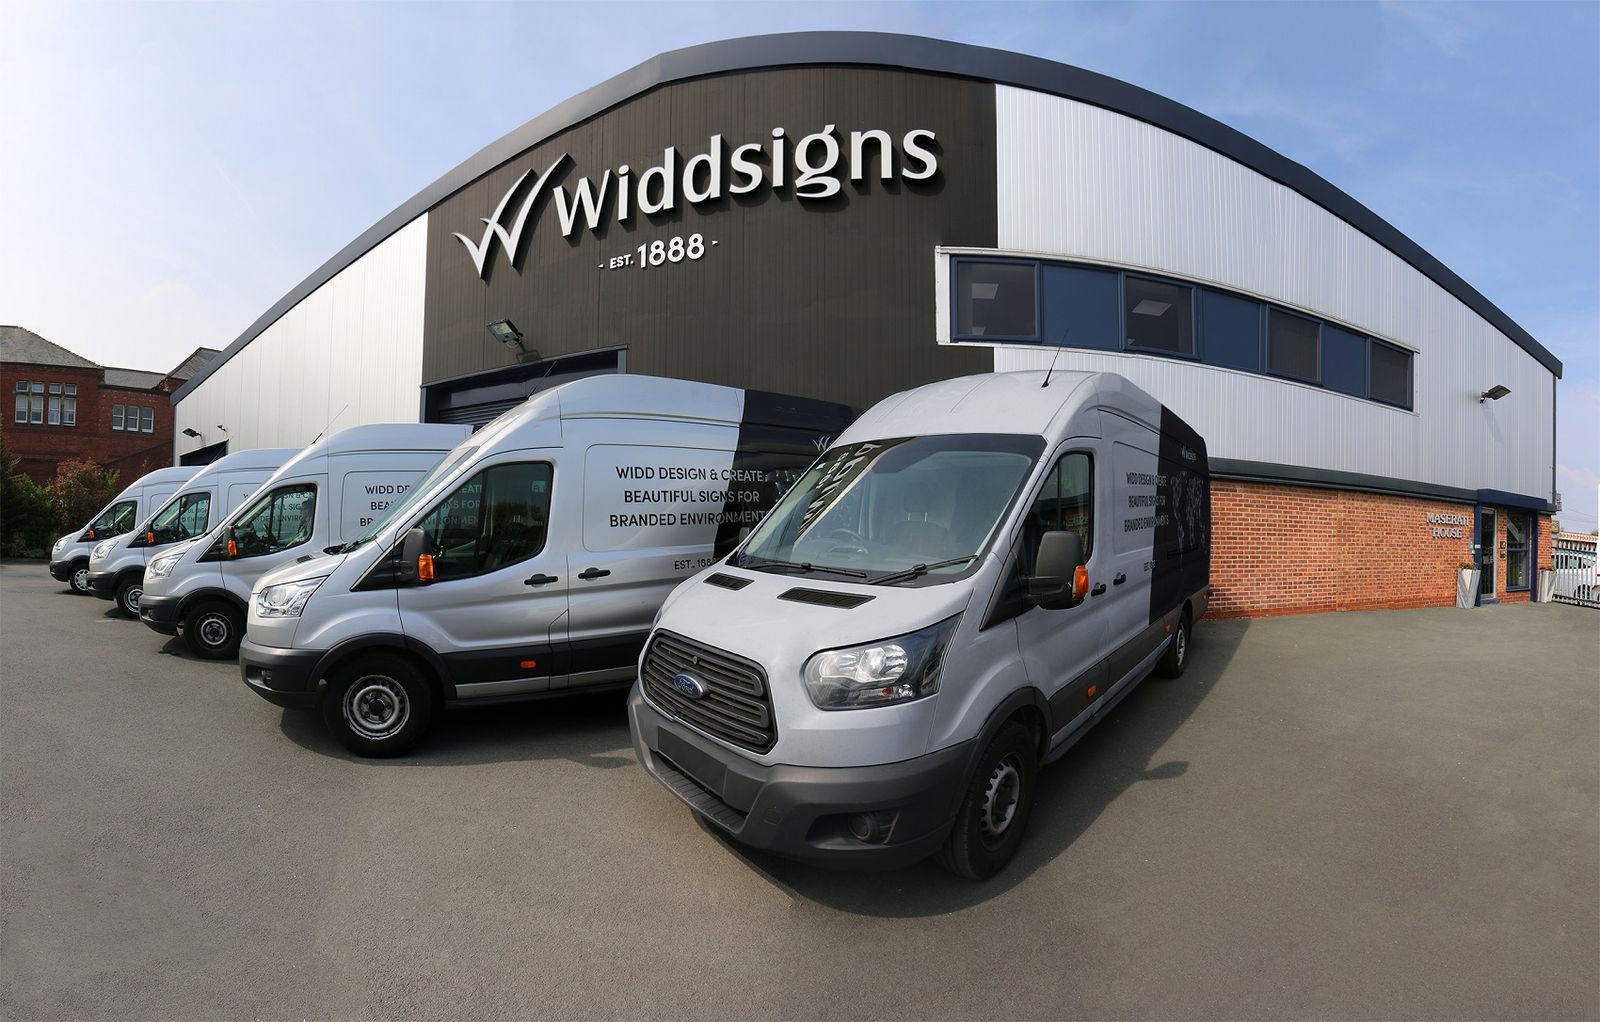 Leeds signage manufacturer acquires North West business